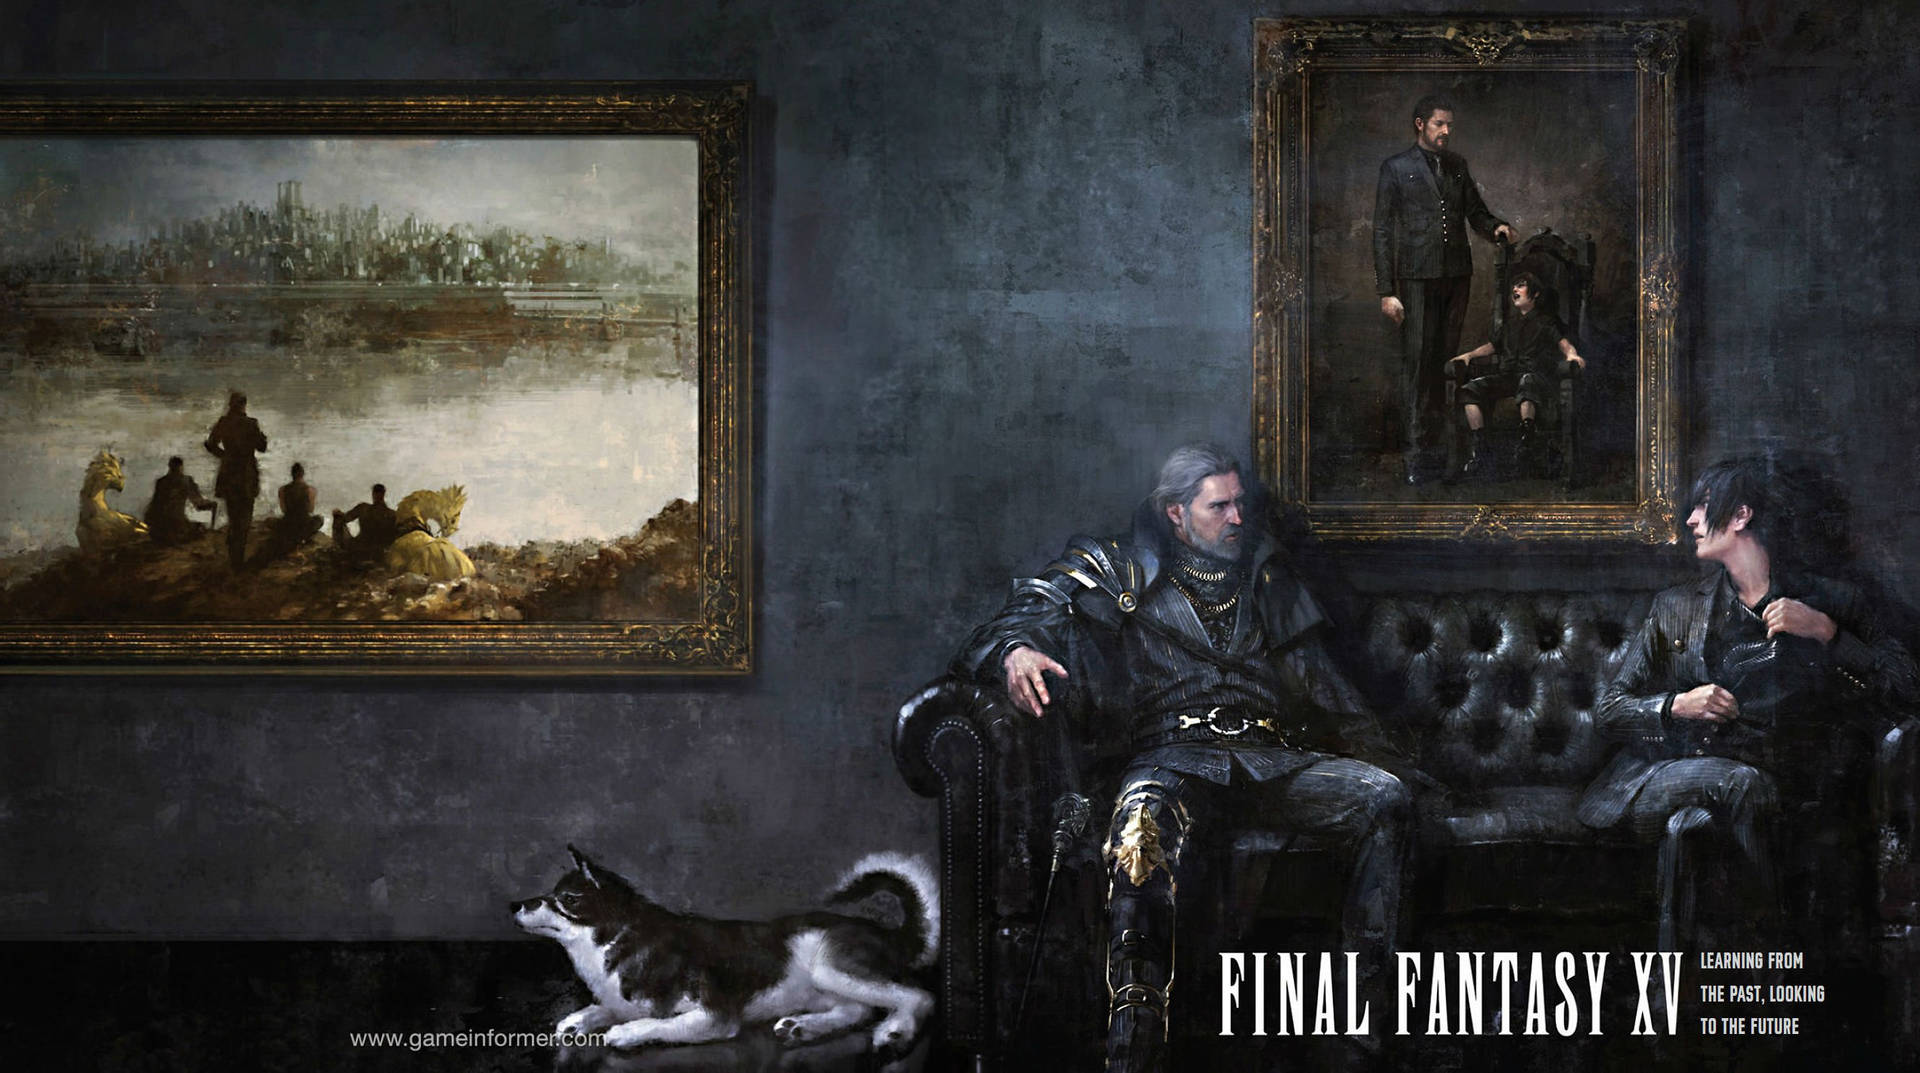 Noctis And King Regis Of Final Fantasy Xv